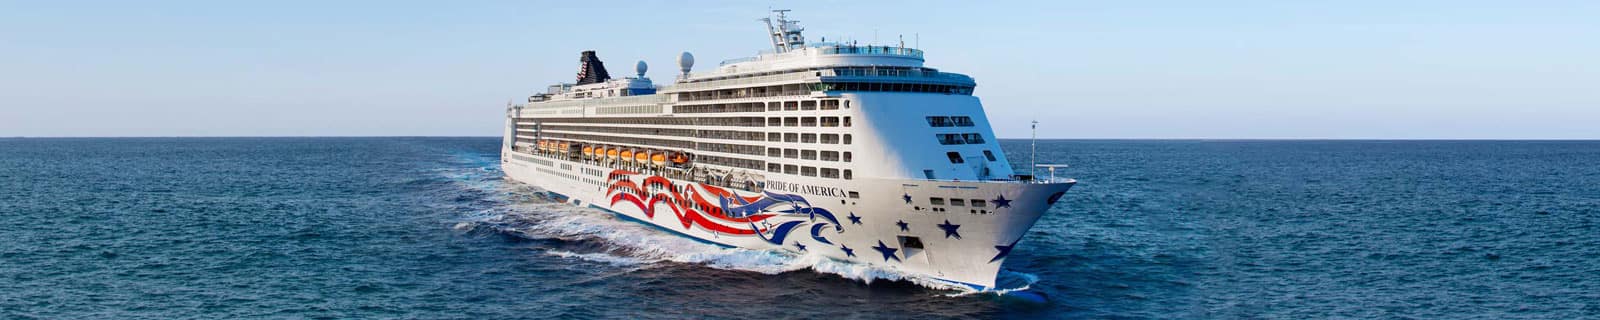 cruise ship america